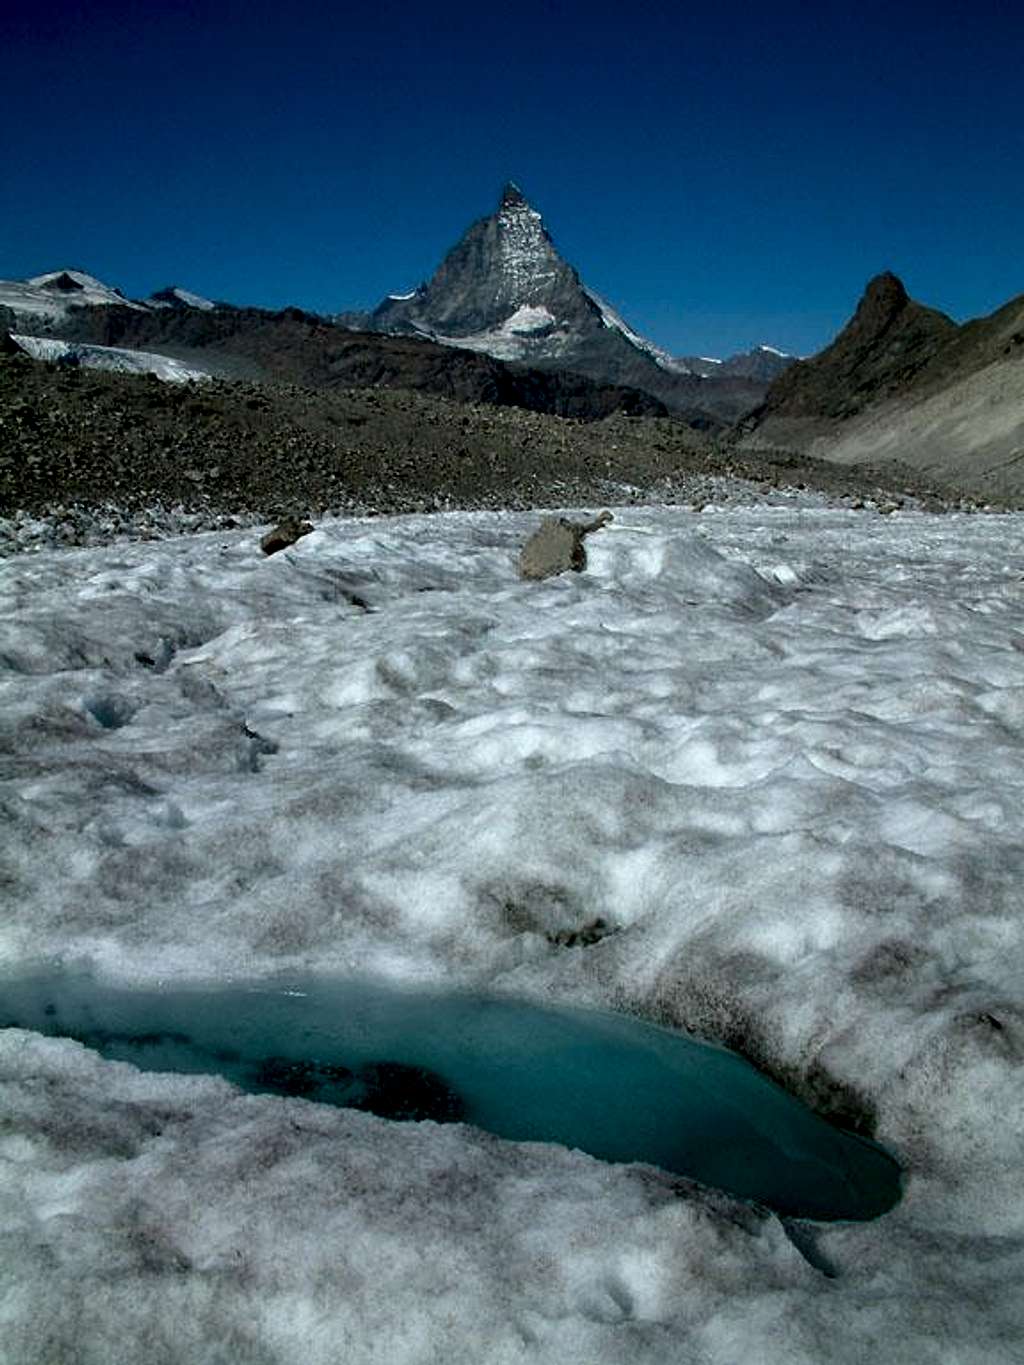 Matterhorn from Gornerglacier